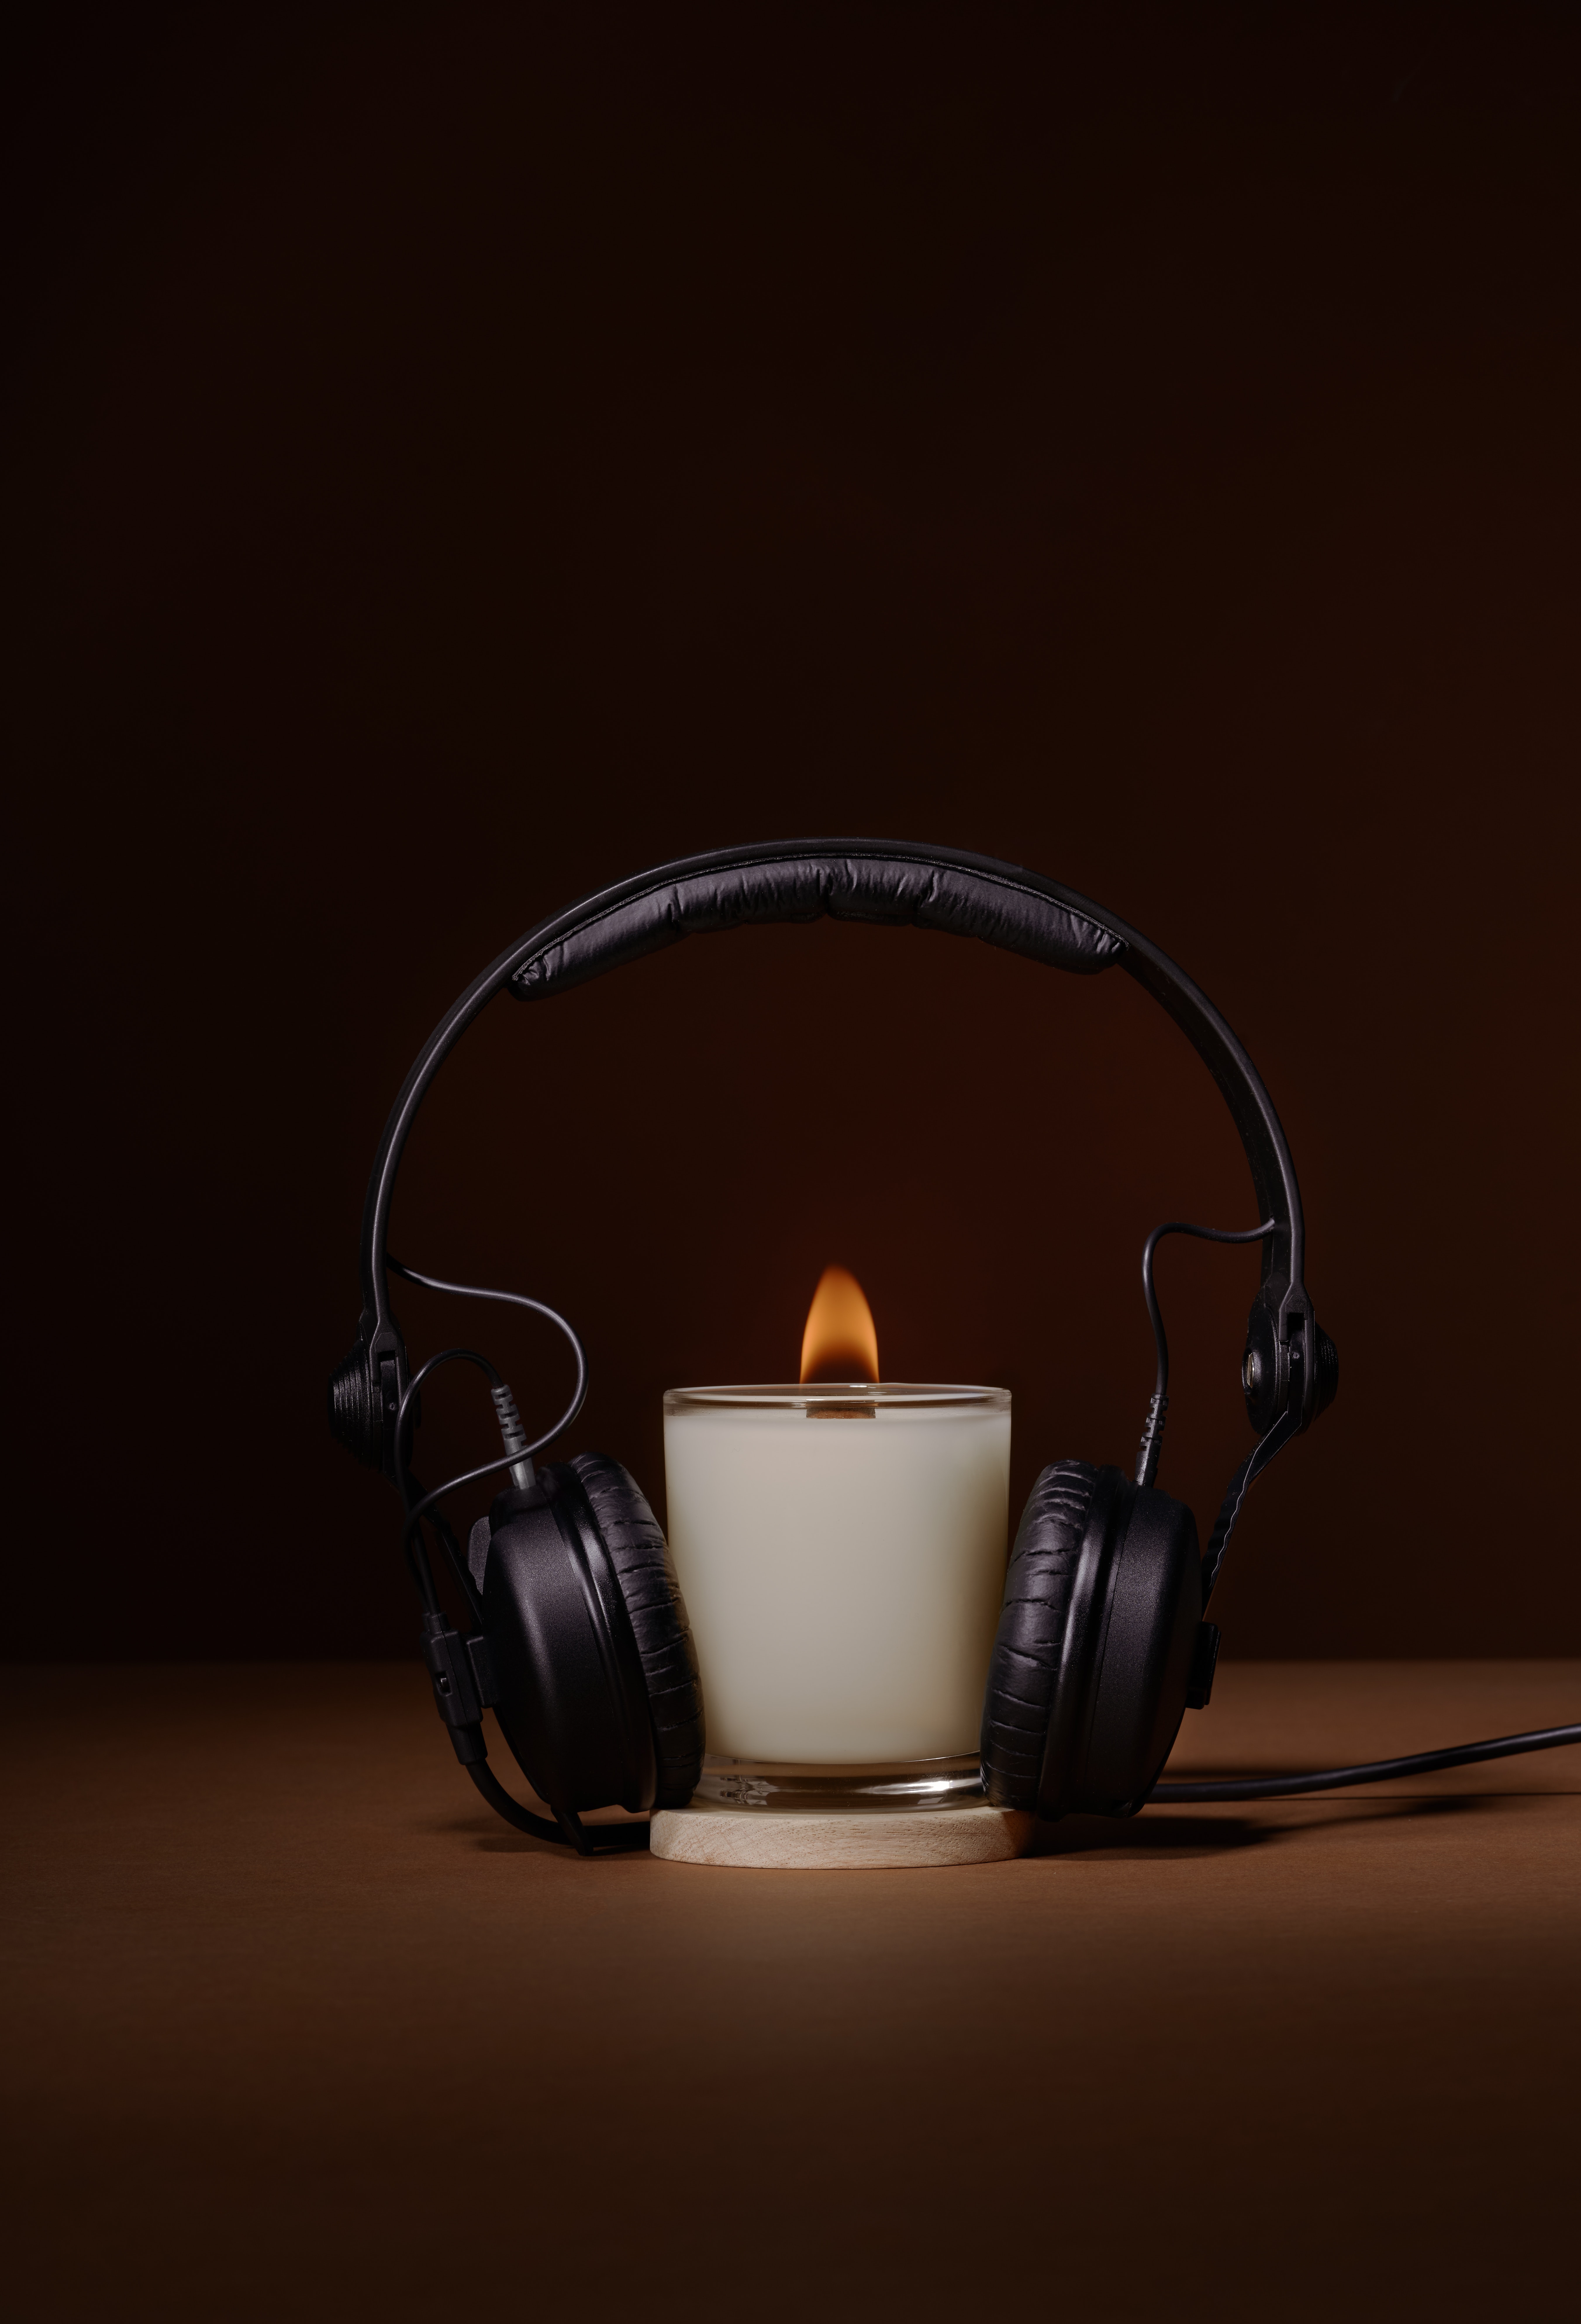 Candle under headphones